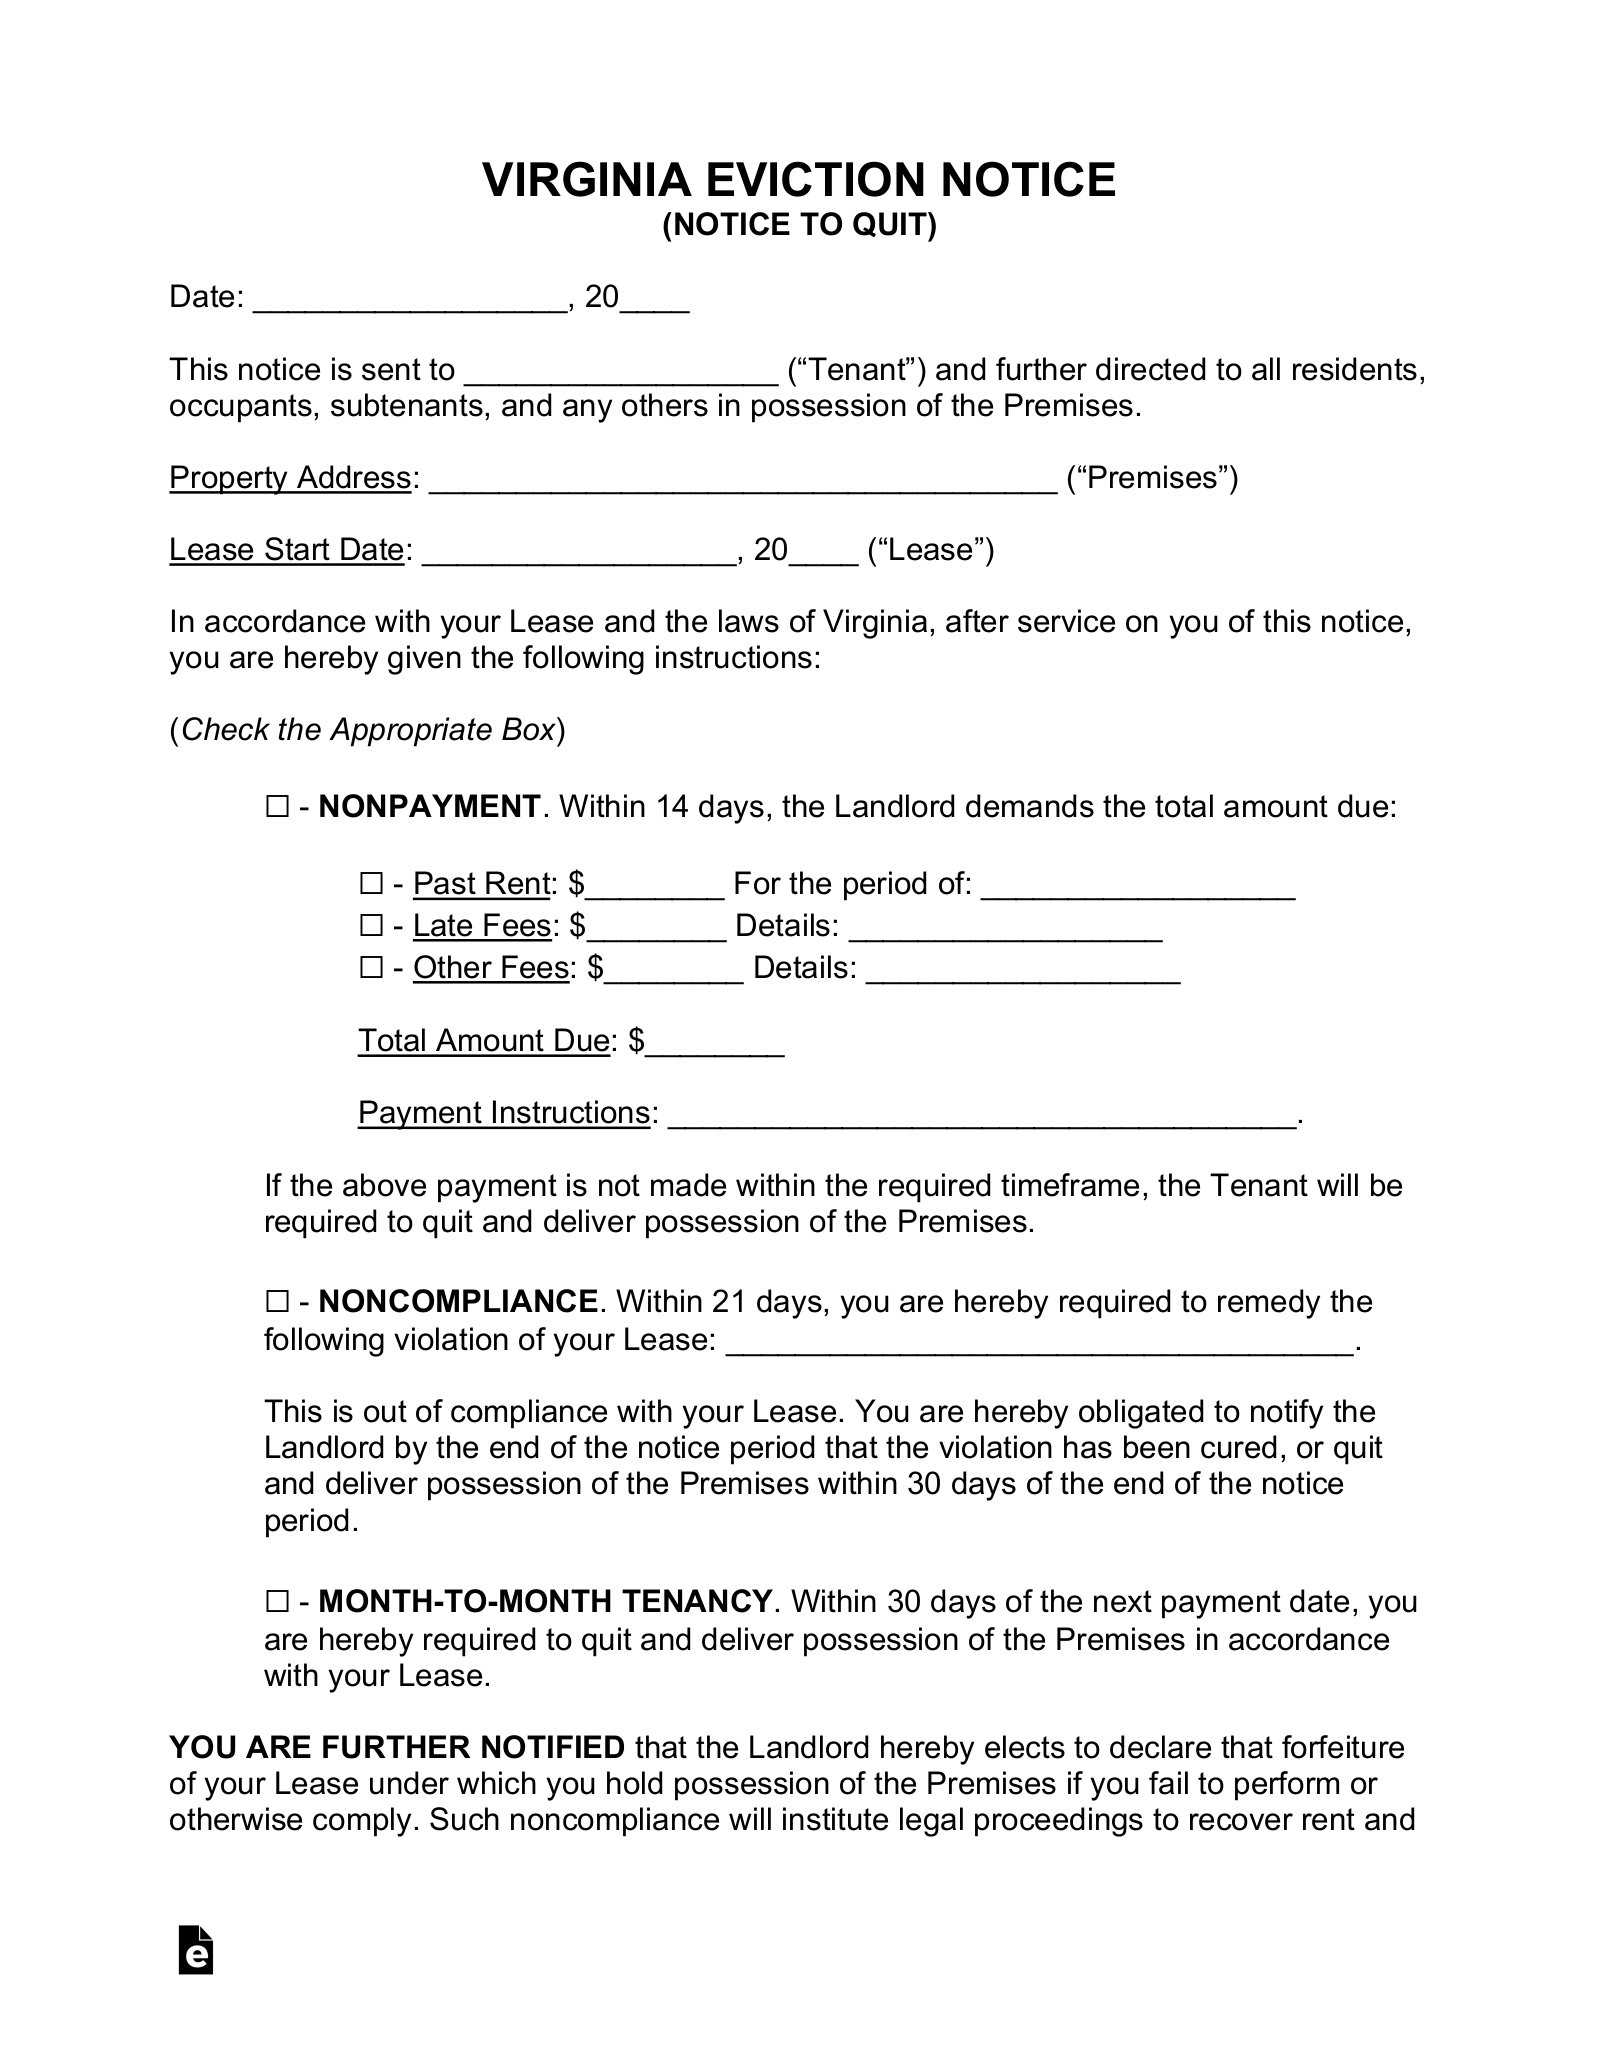 Virginia Eviction Notice Forms (3)